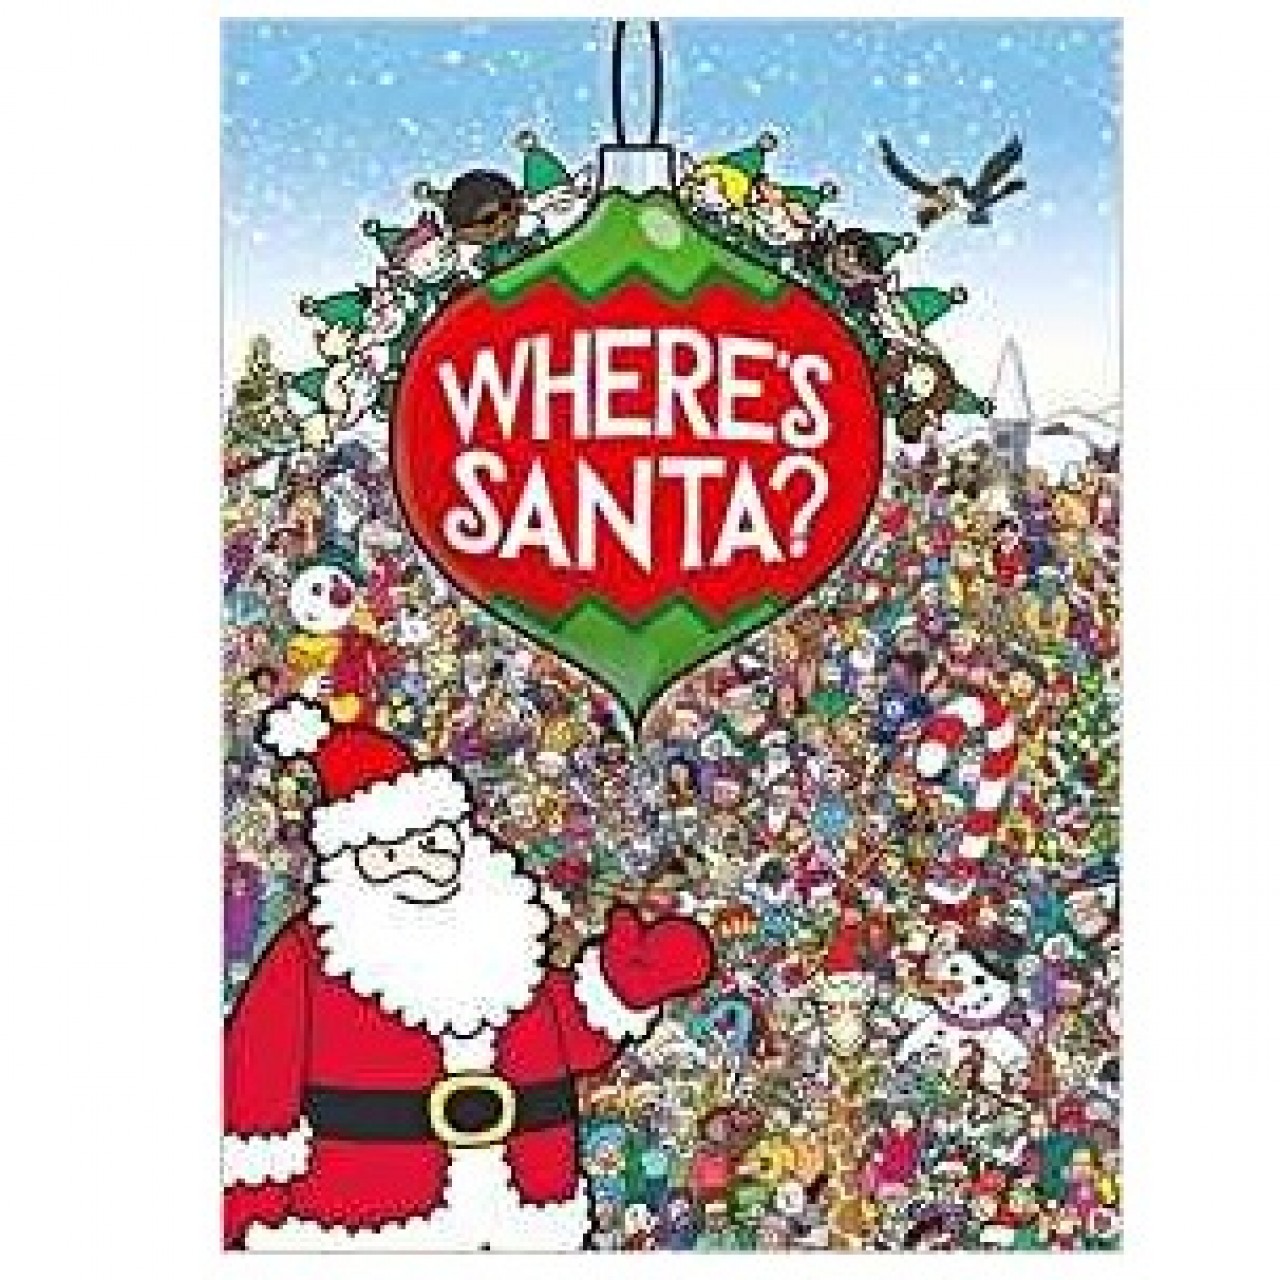 Where’s Santa? By Chuck Whelon - Hardback 2014